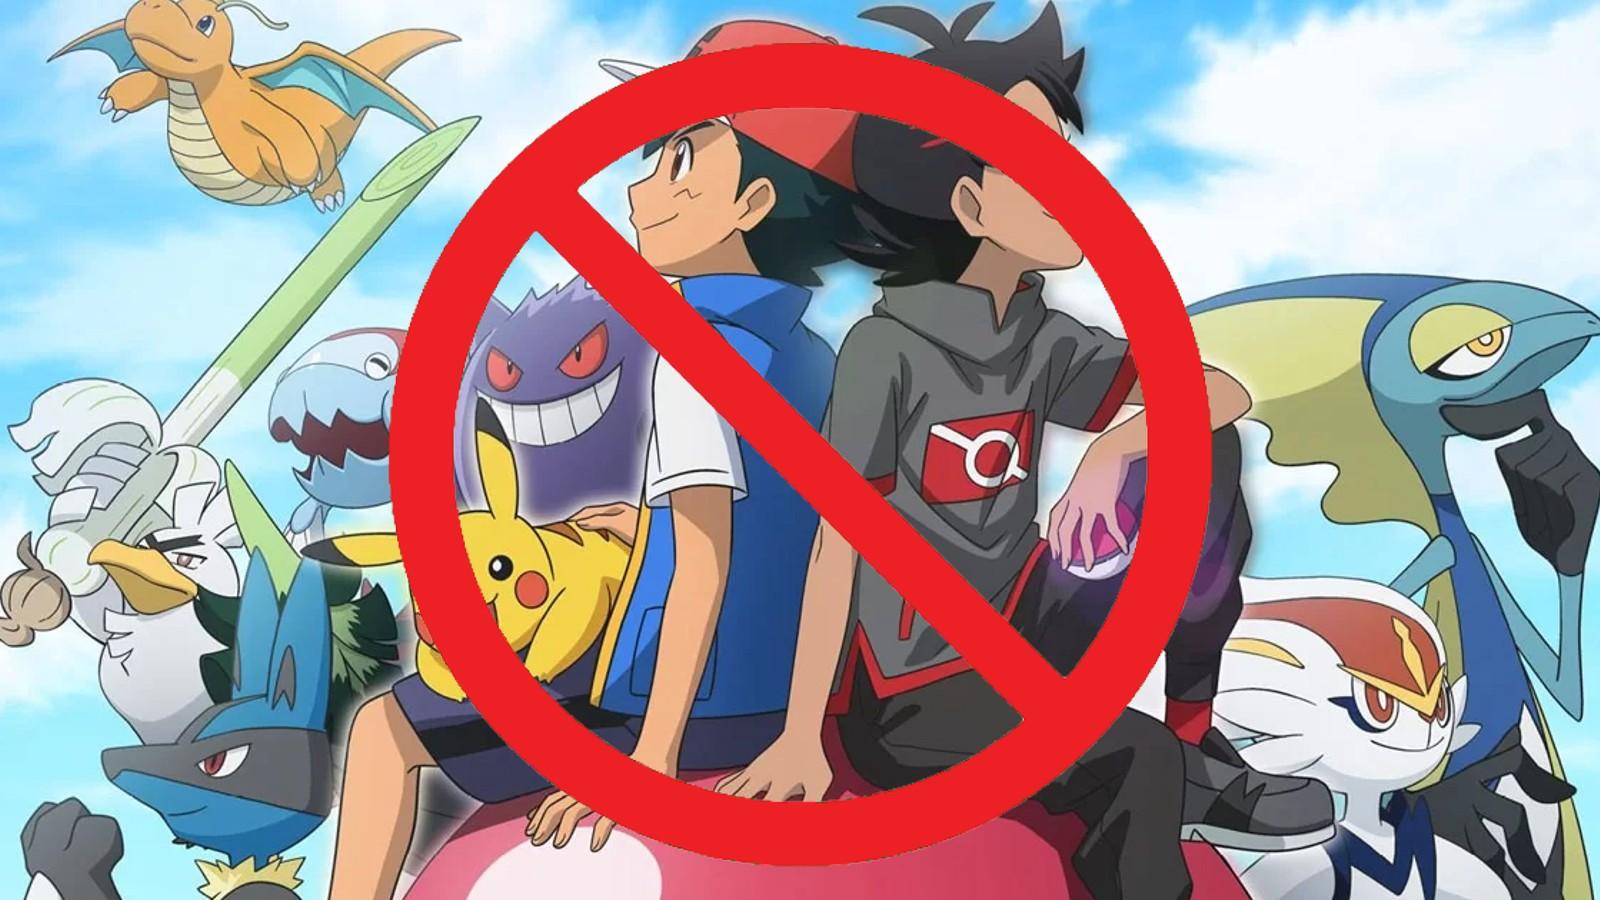 Pokemon Anime copyright strike claims